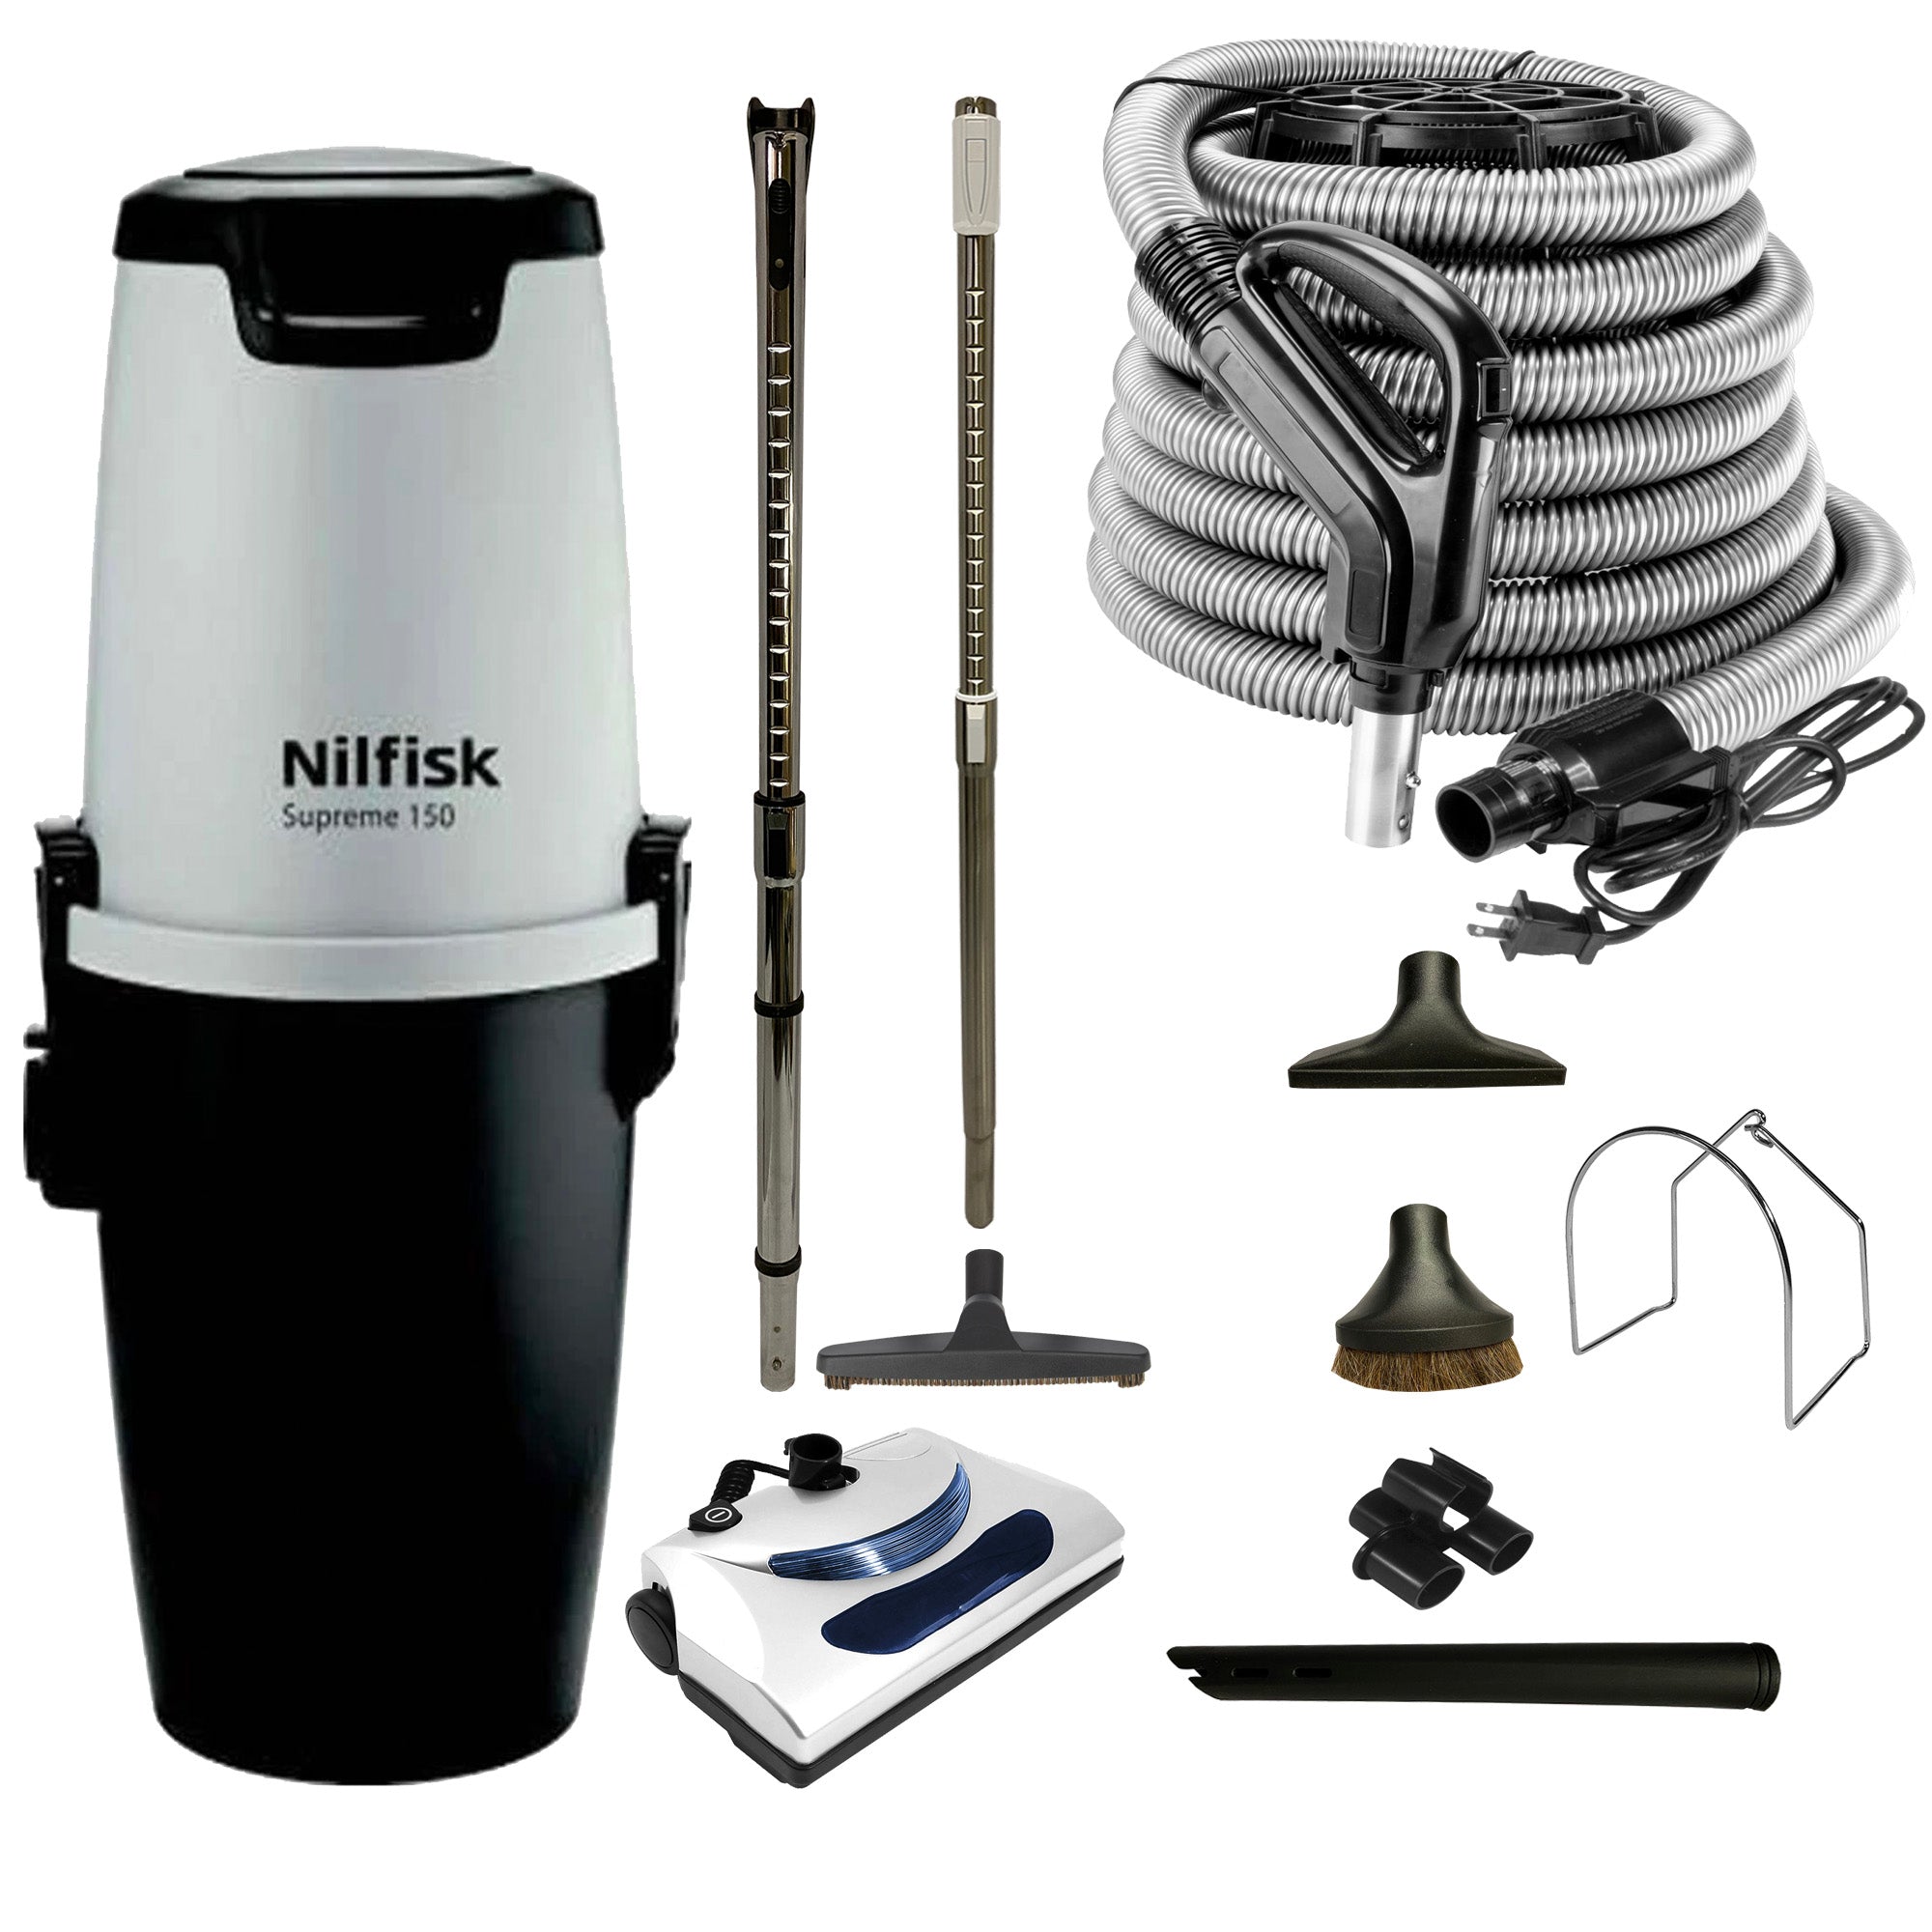 Nilfisk Supreme 150 Central Vacuum with Basic Electric Kit - Black